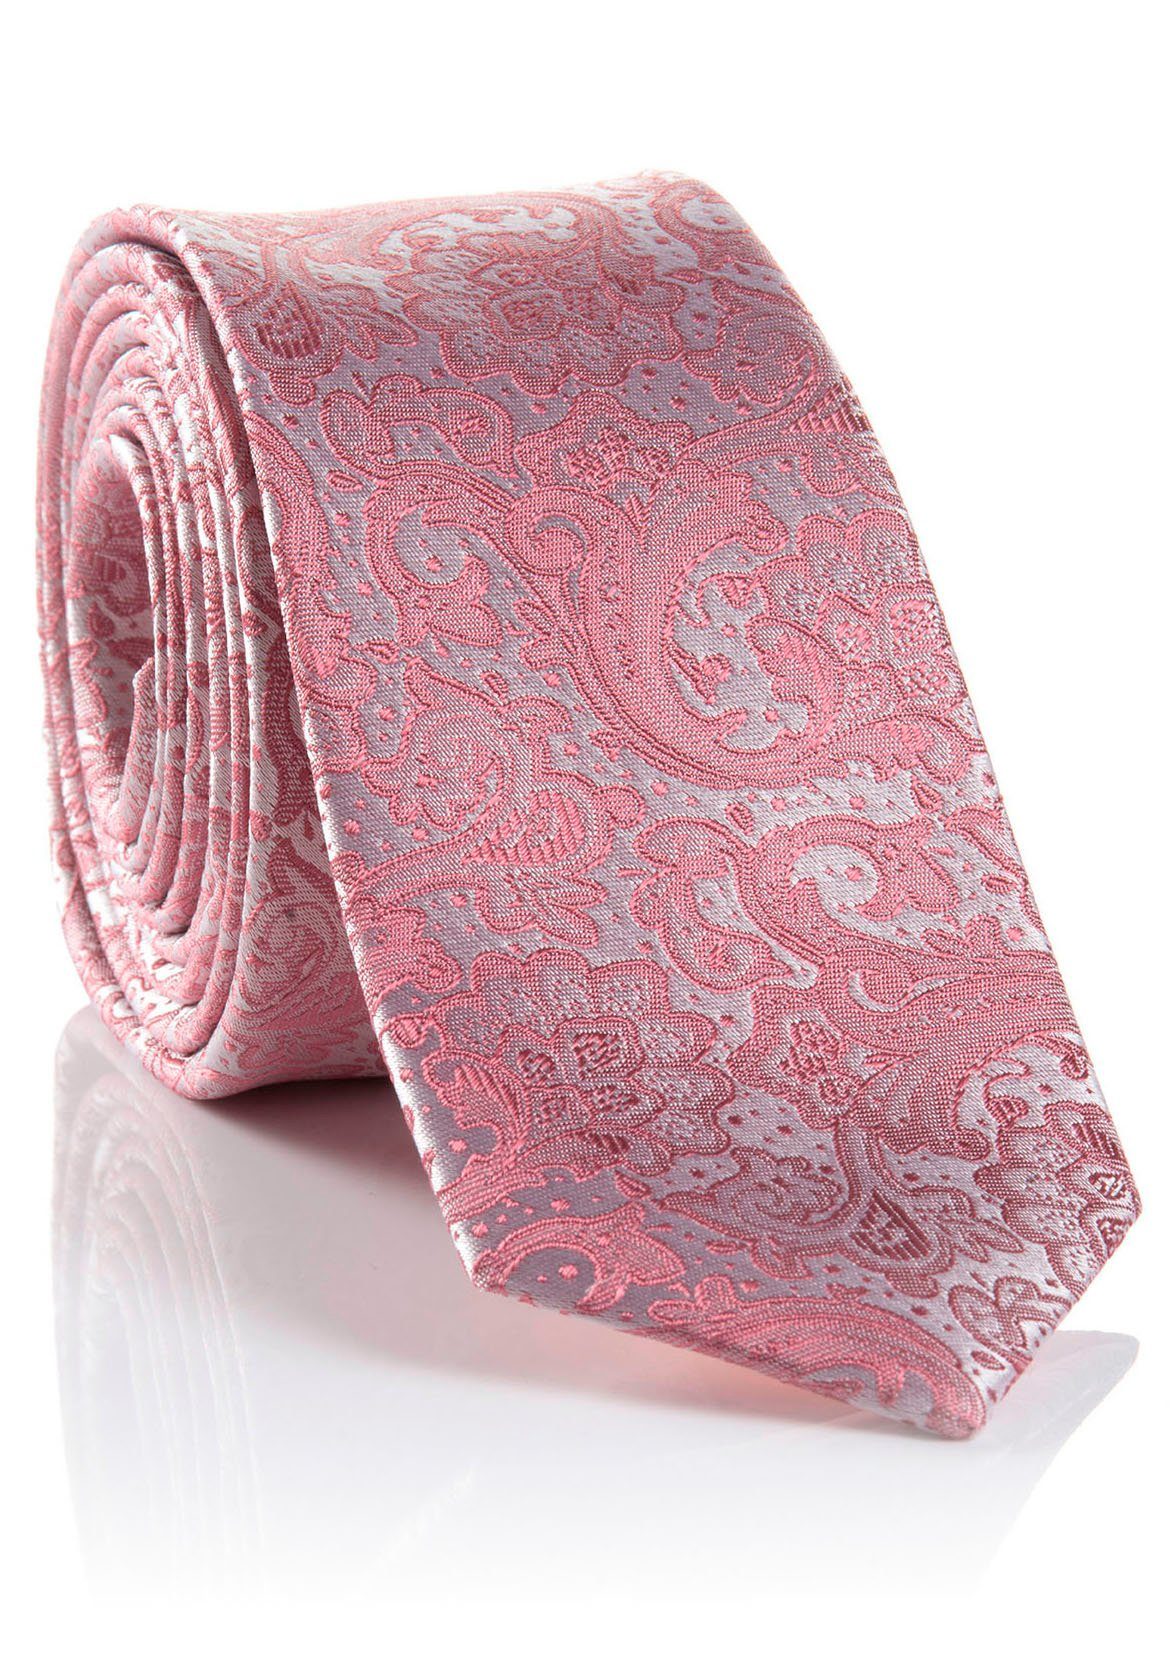 MONTI Krawatte LELIO red aus reiner Seide, Krawatte bright Paisley-Muster